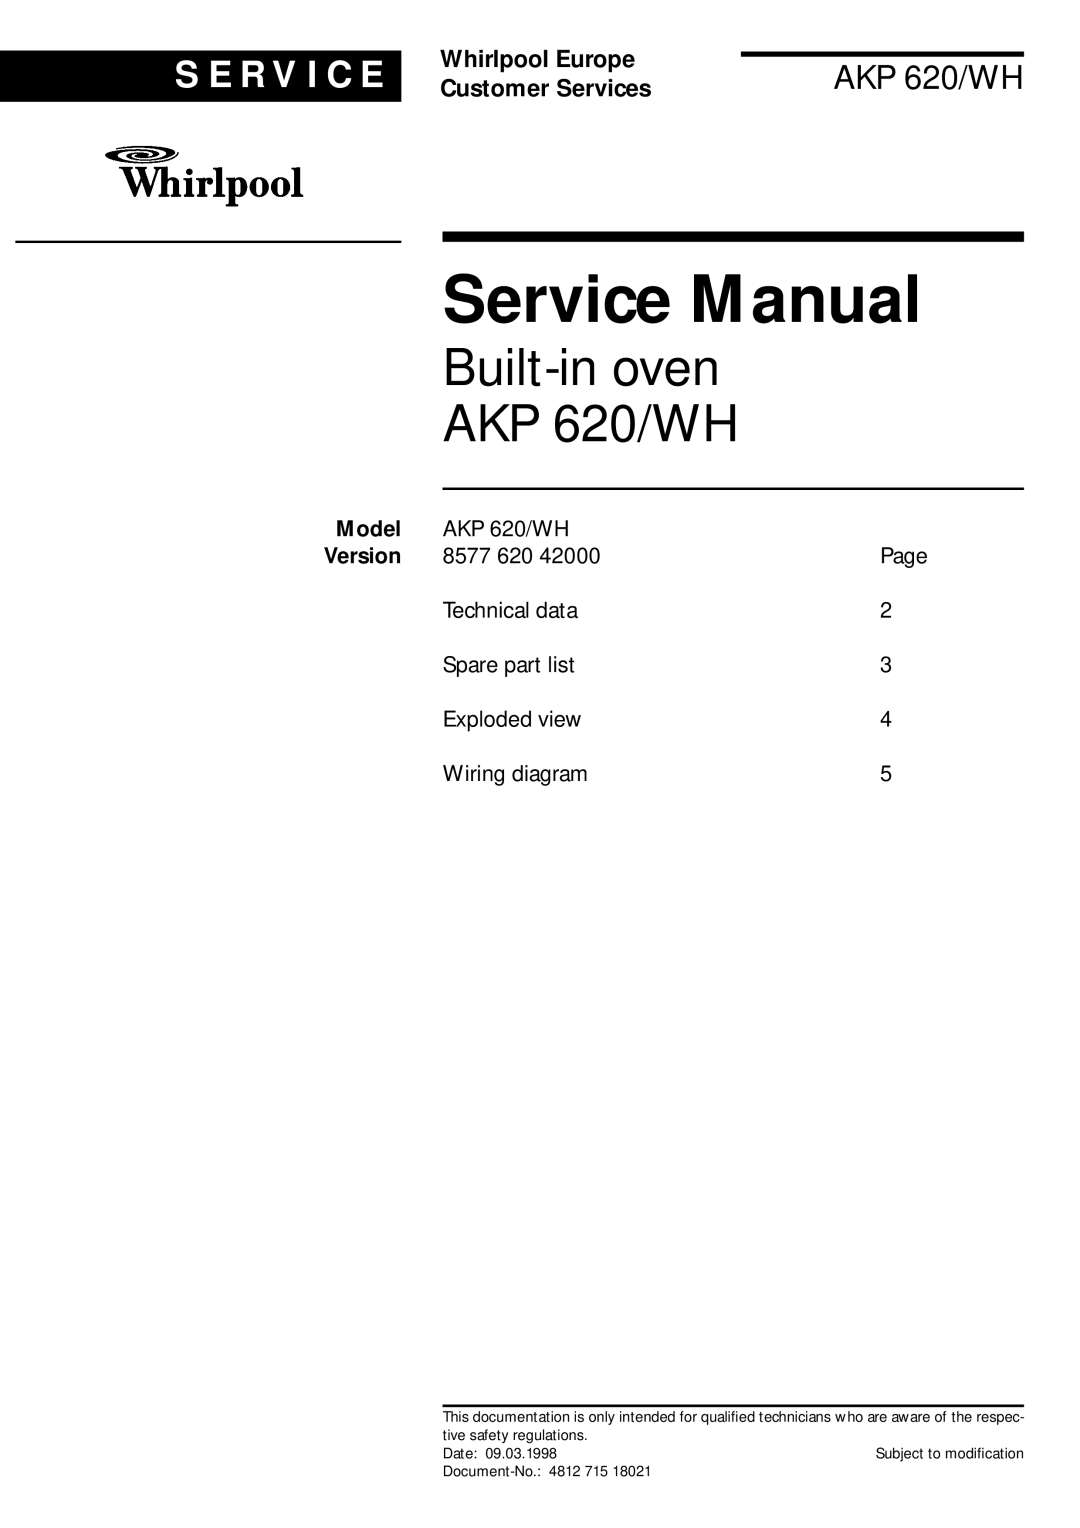 Whirlpool AKP620 service manual Model, Built-inoven AKP 620/WH, S E R V I C E, Whirlpool Europe, Customer Services 